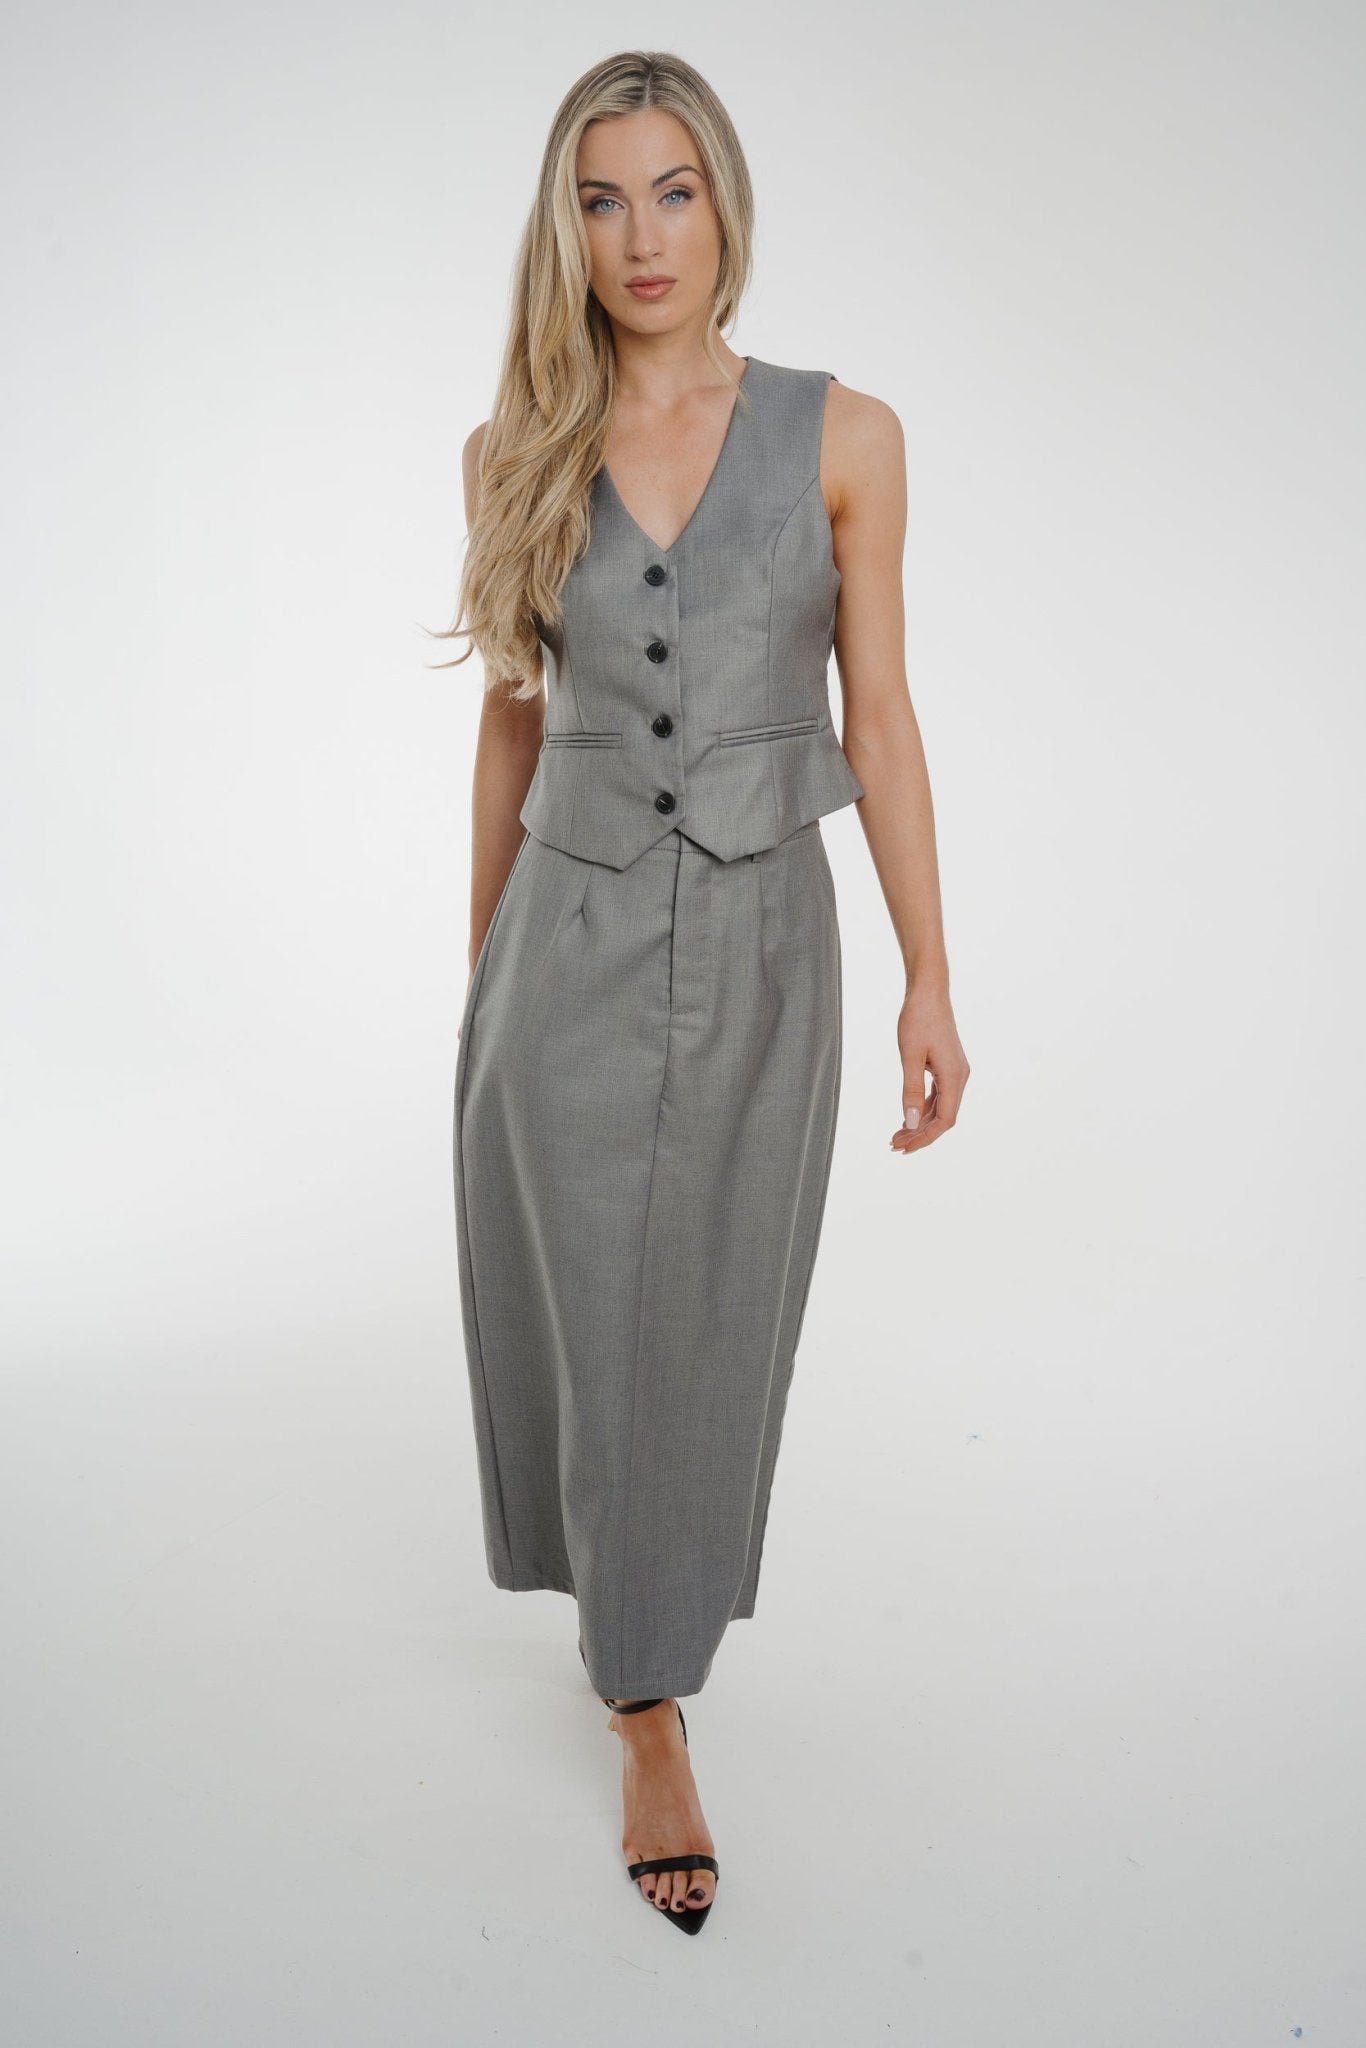 Holly Waistcoat In Grey - The Walk in Wardrobe